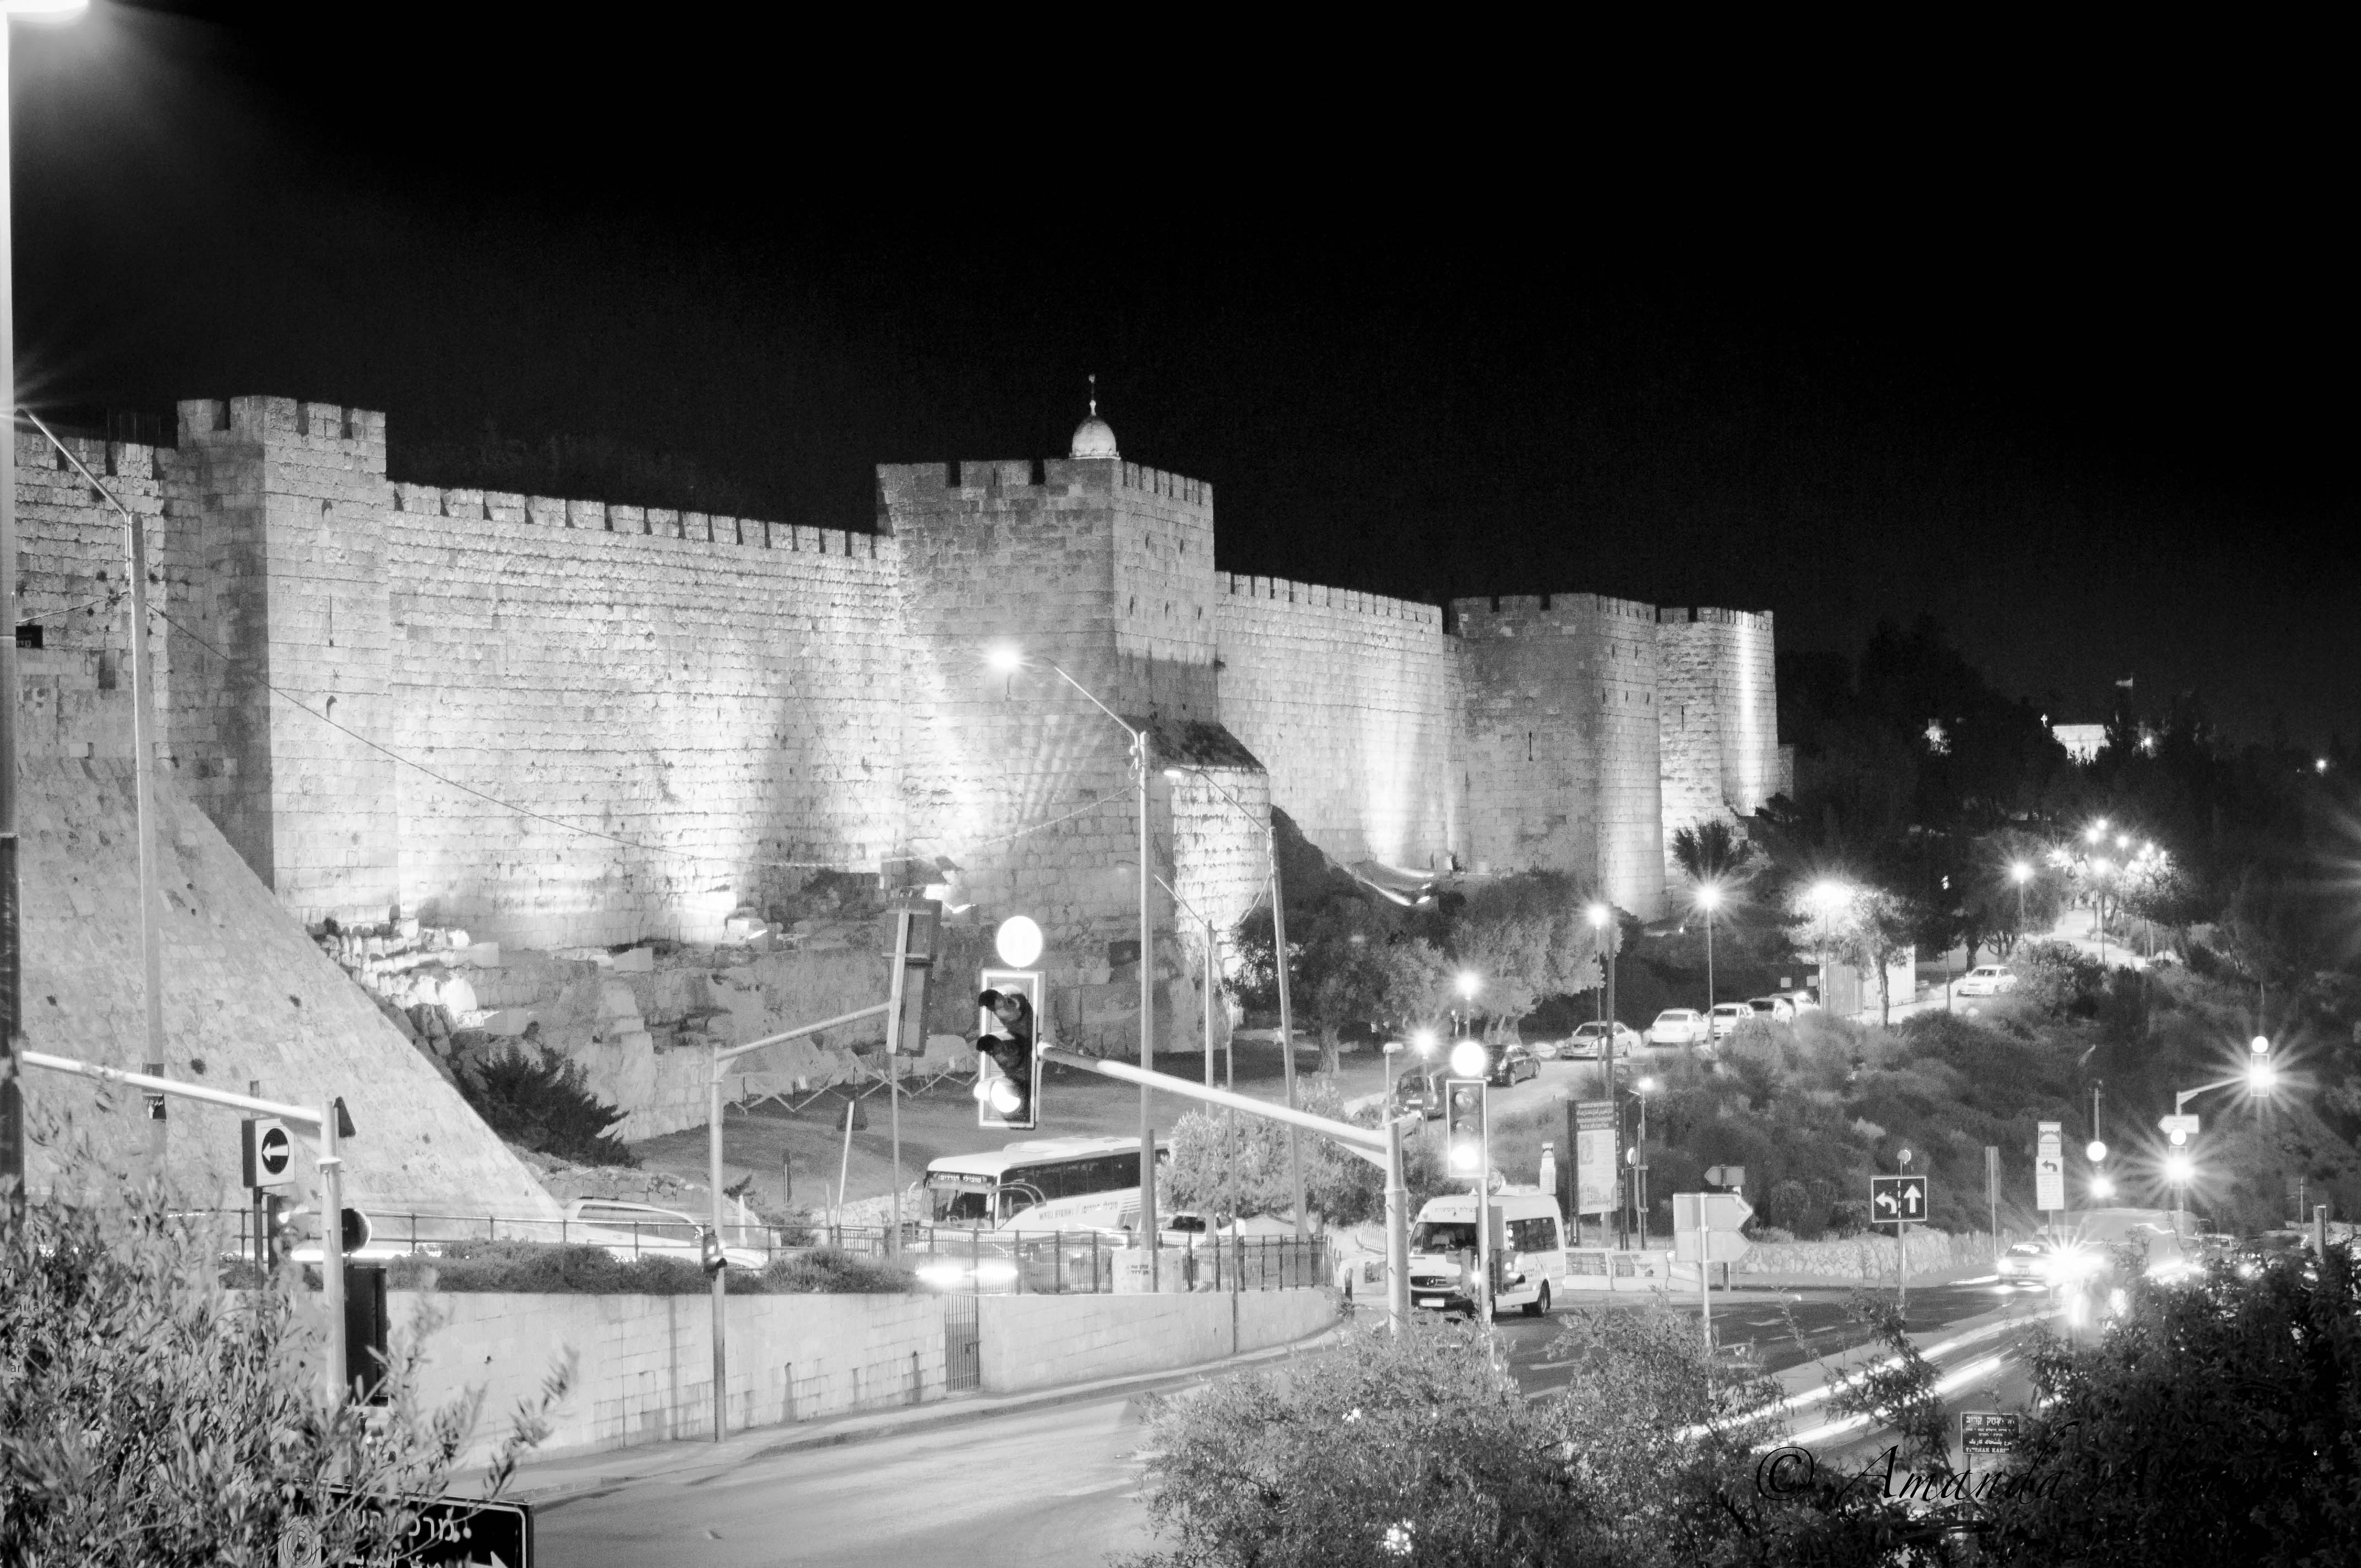 The old city wall at night.